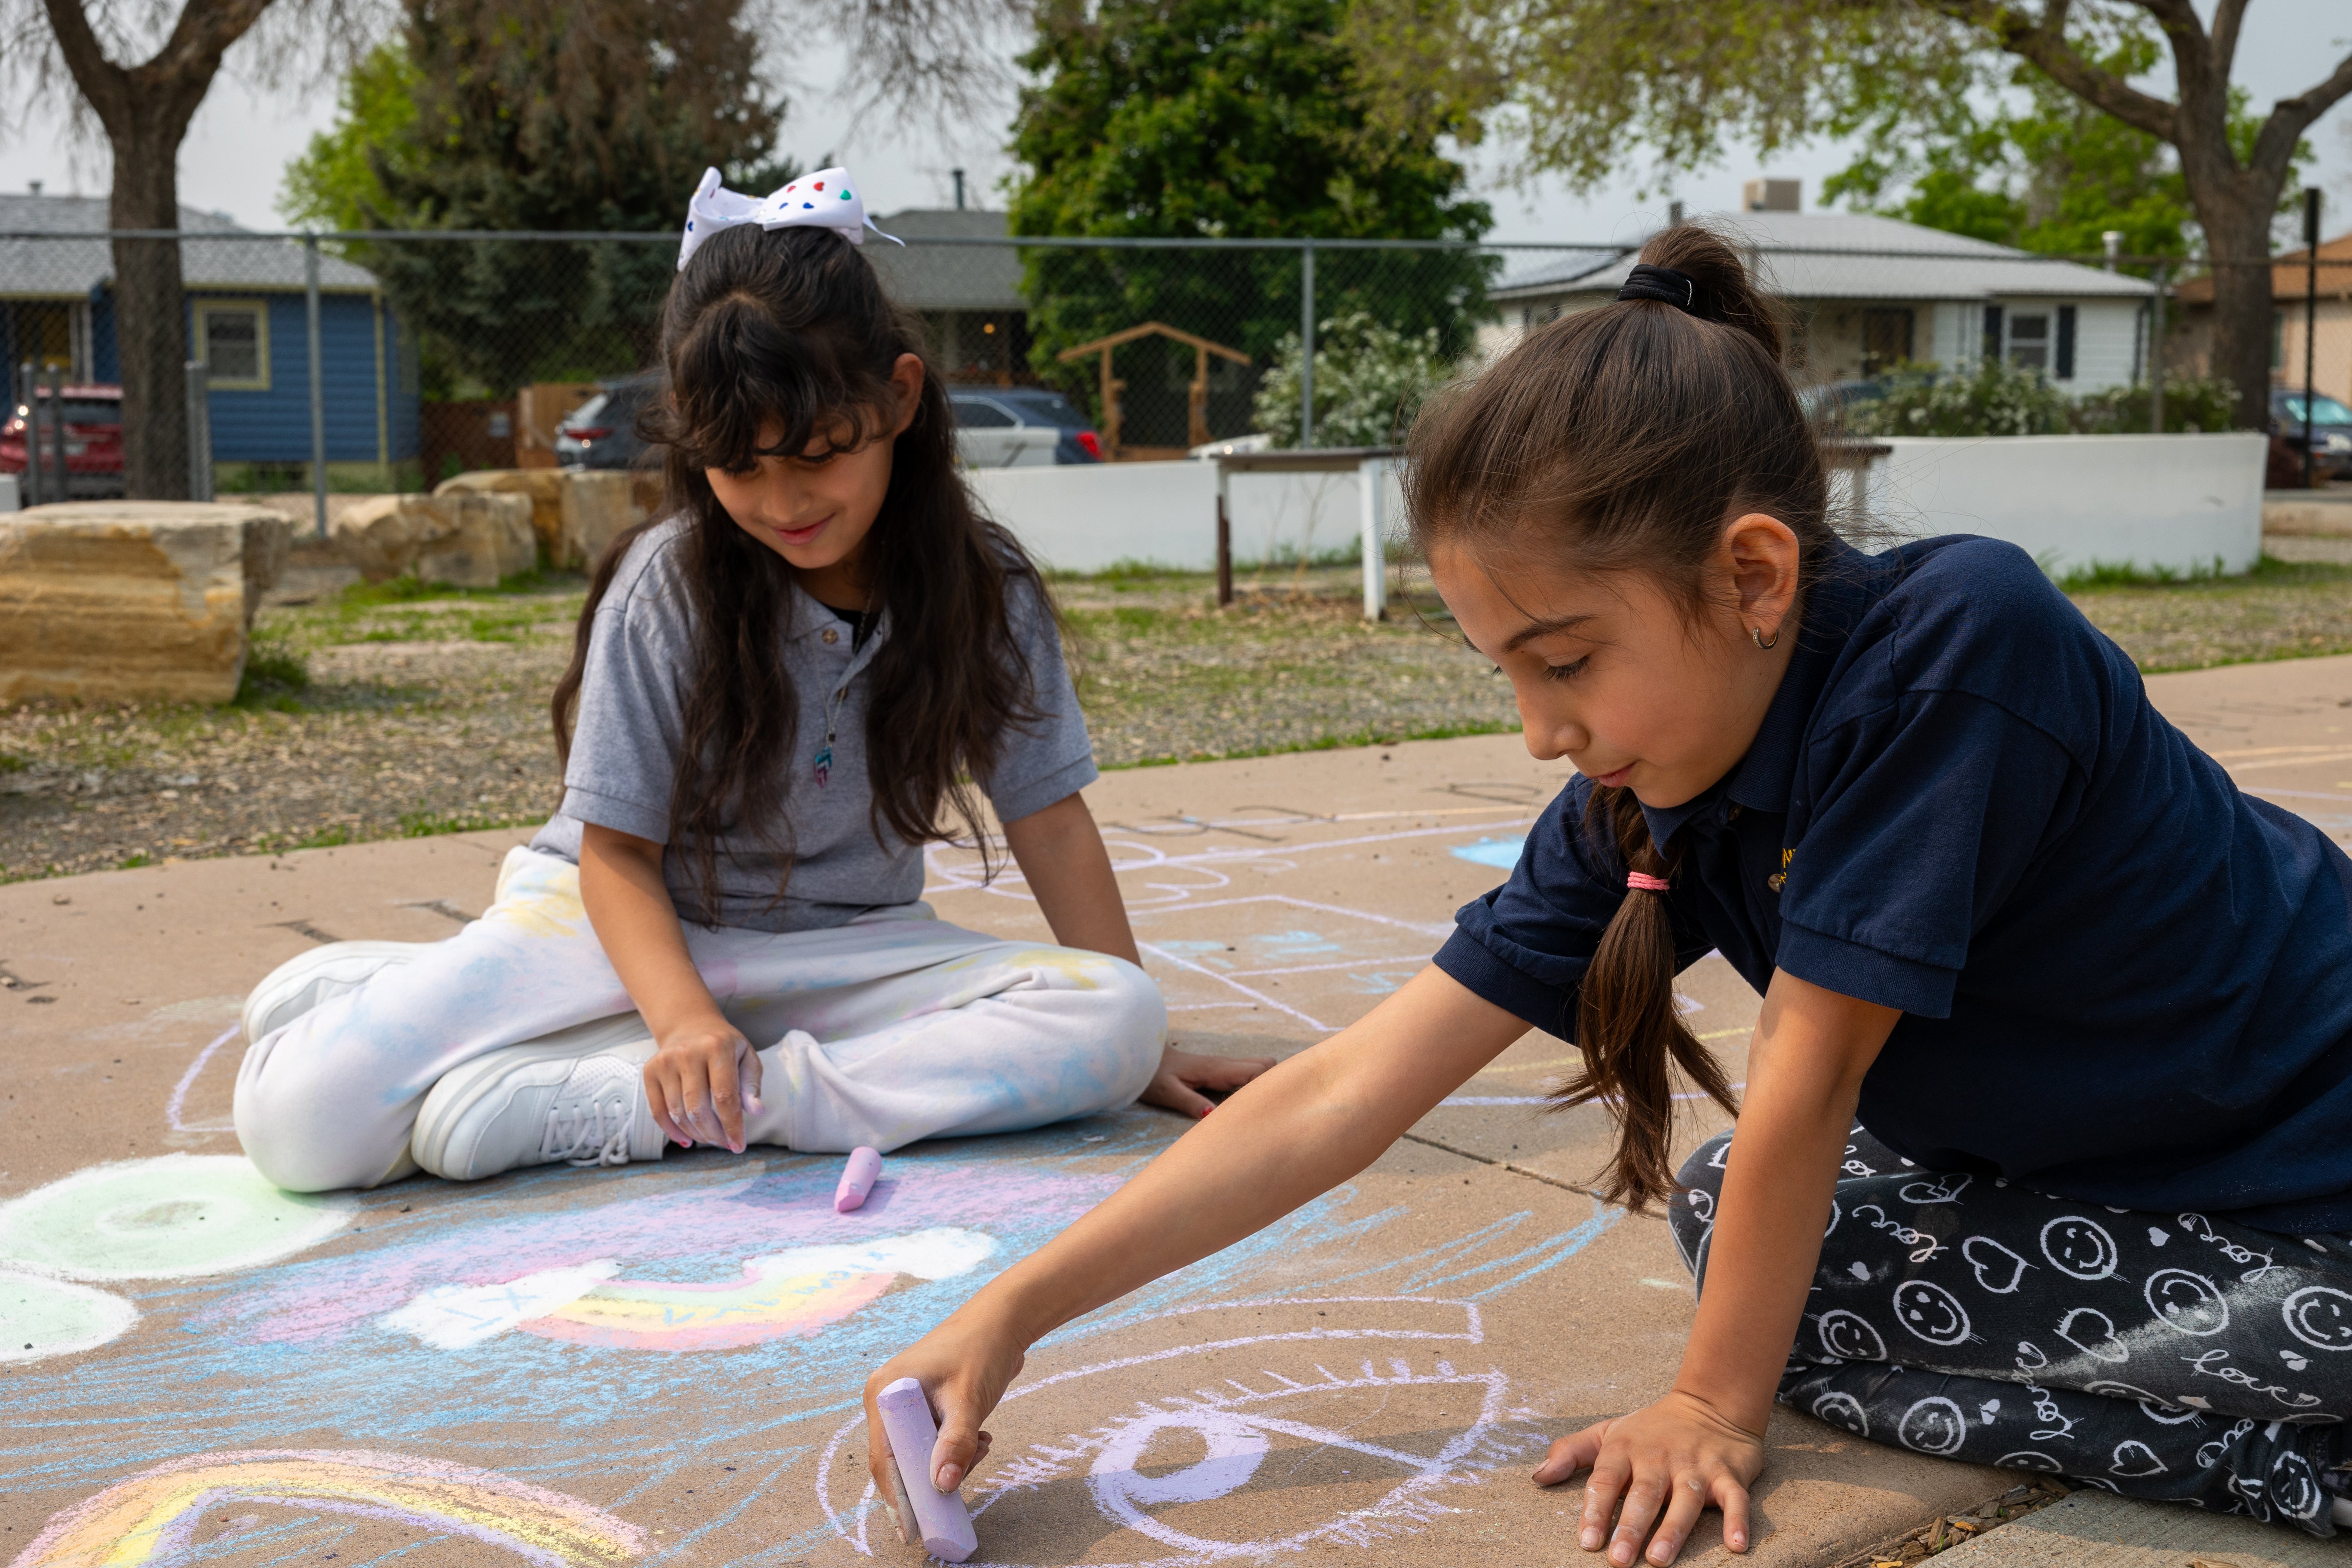 Two girls draw with sidewalk chalk outside.